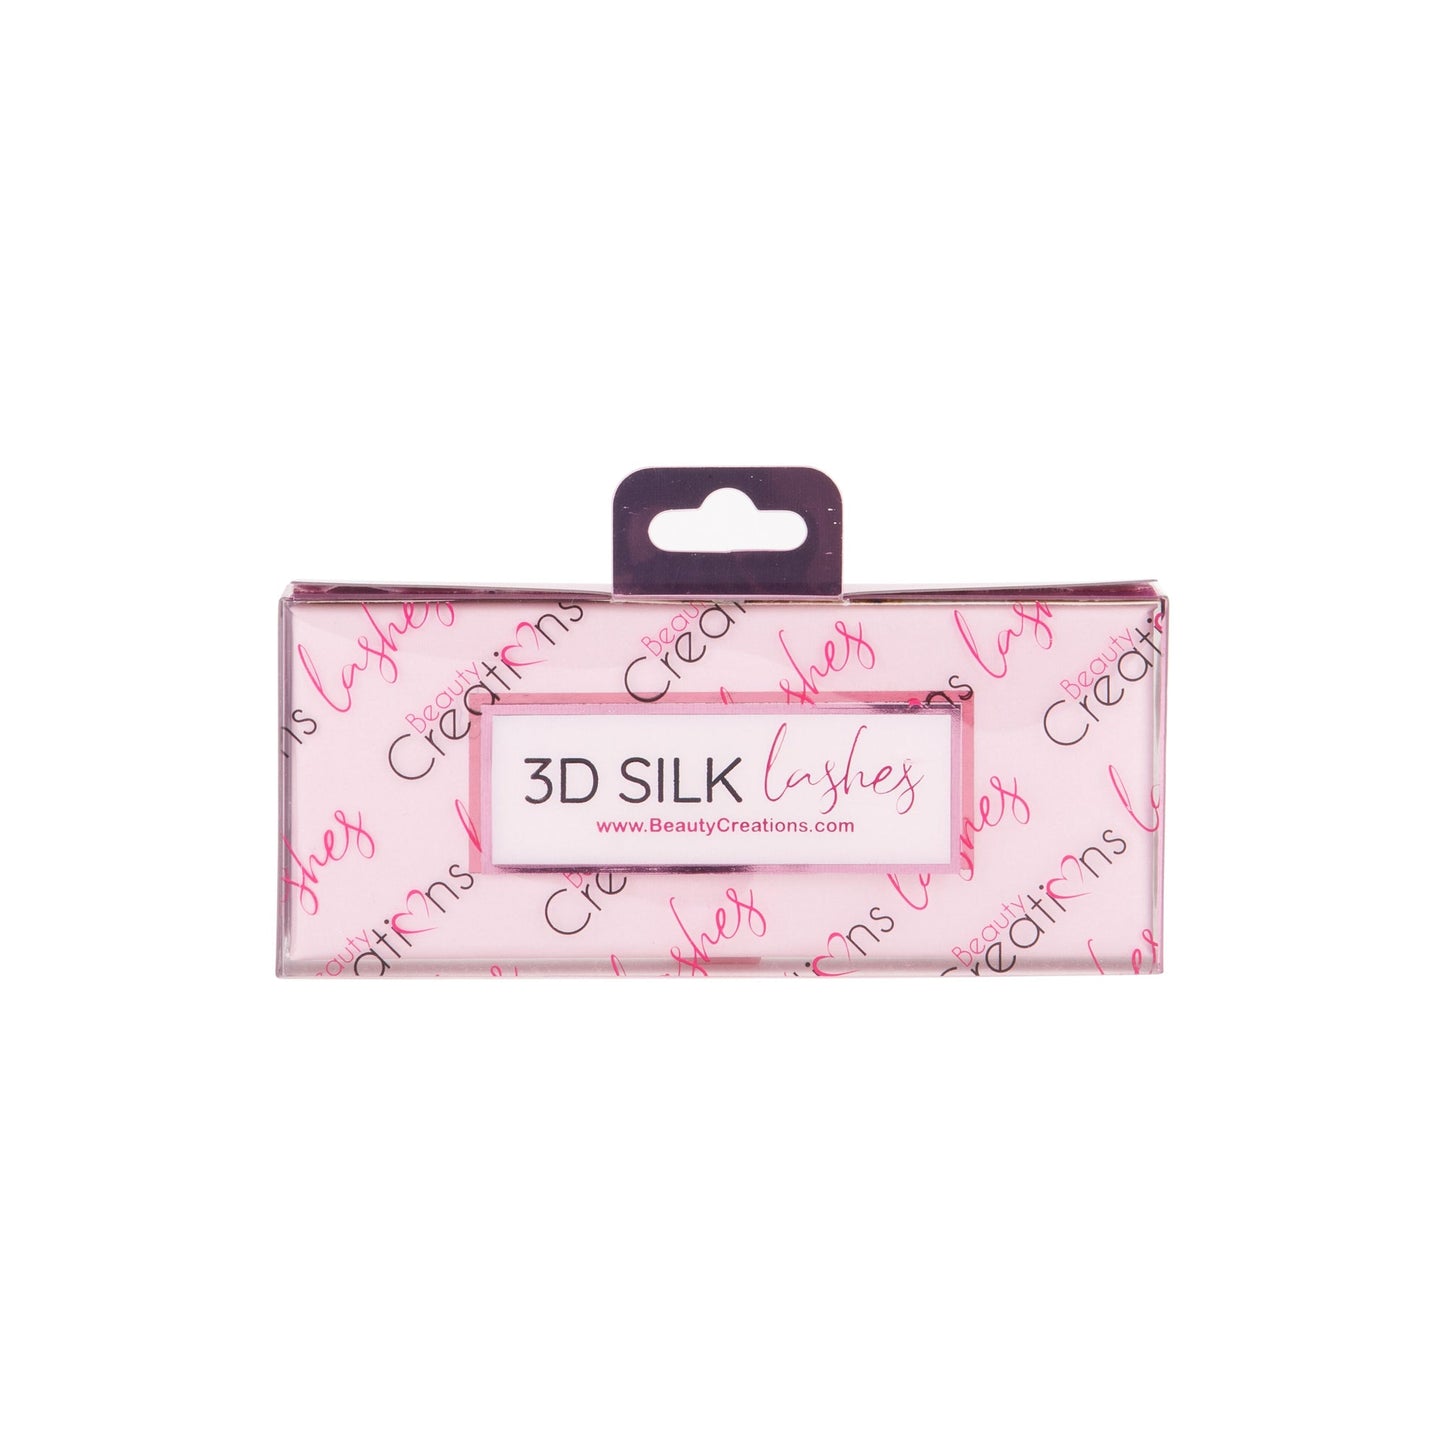 Not Sponsored - 3D Silk Lashes